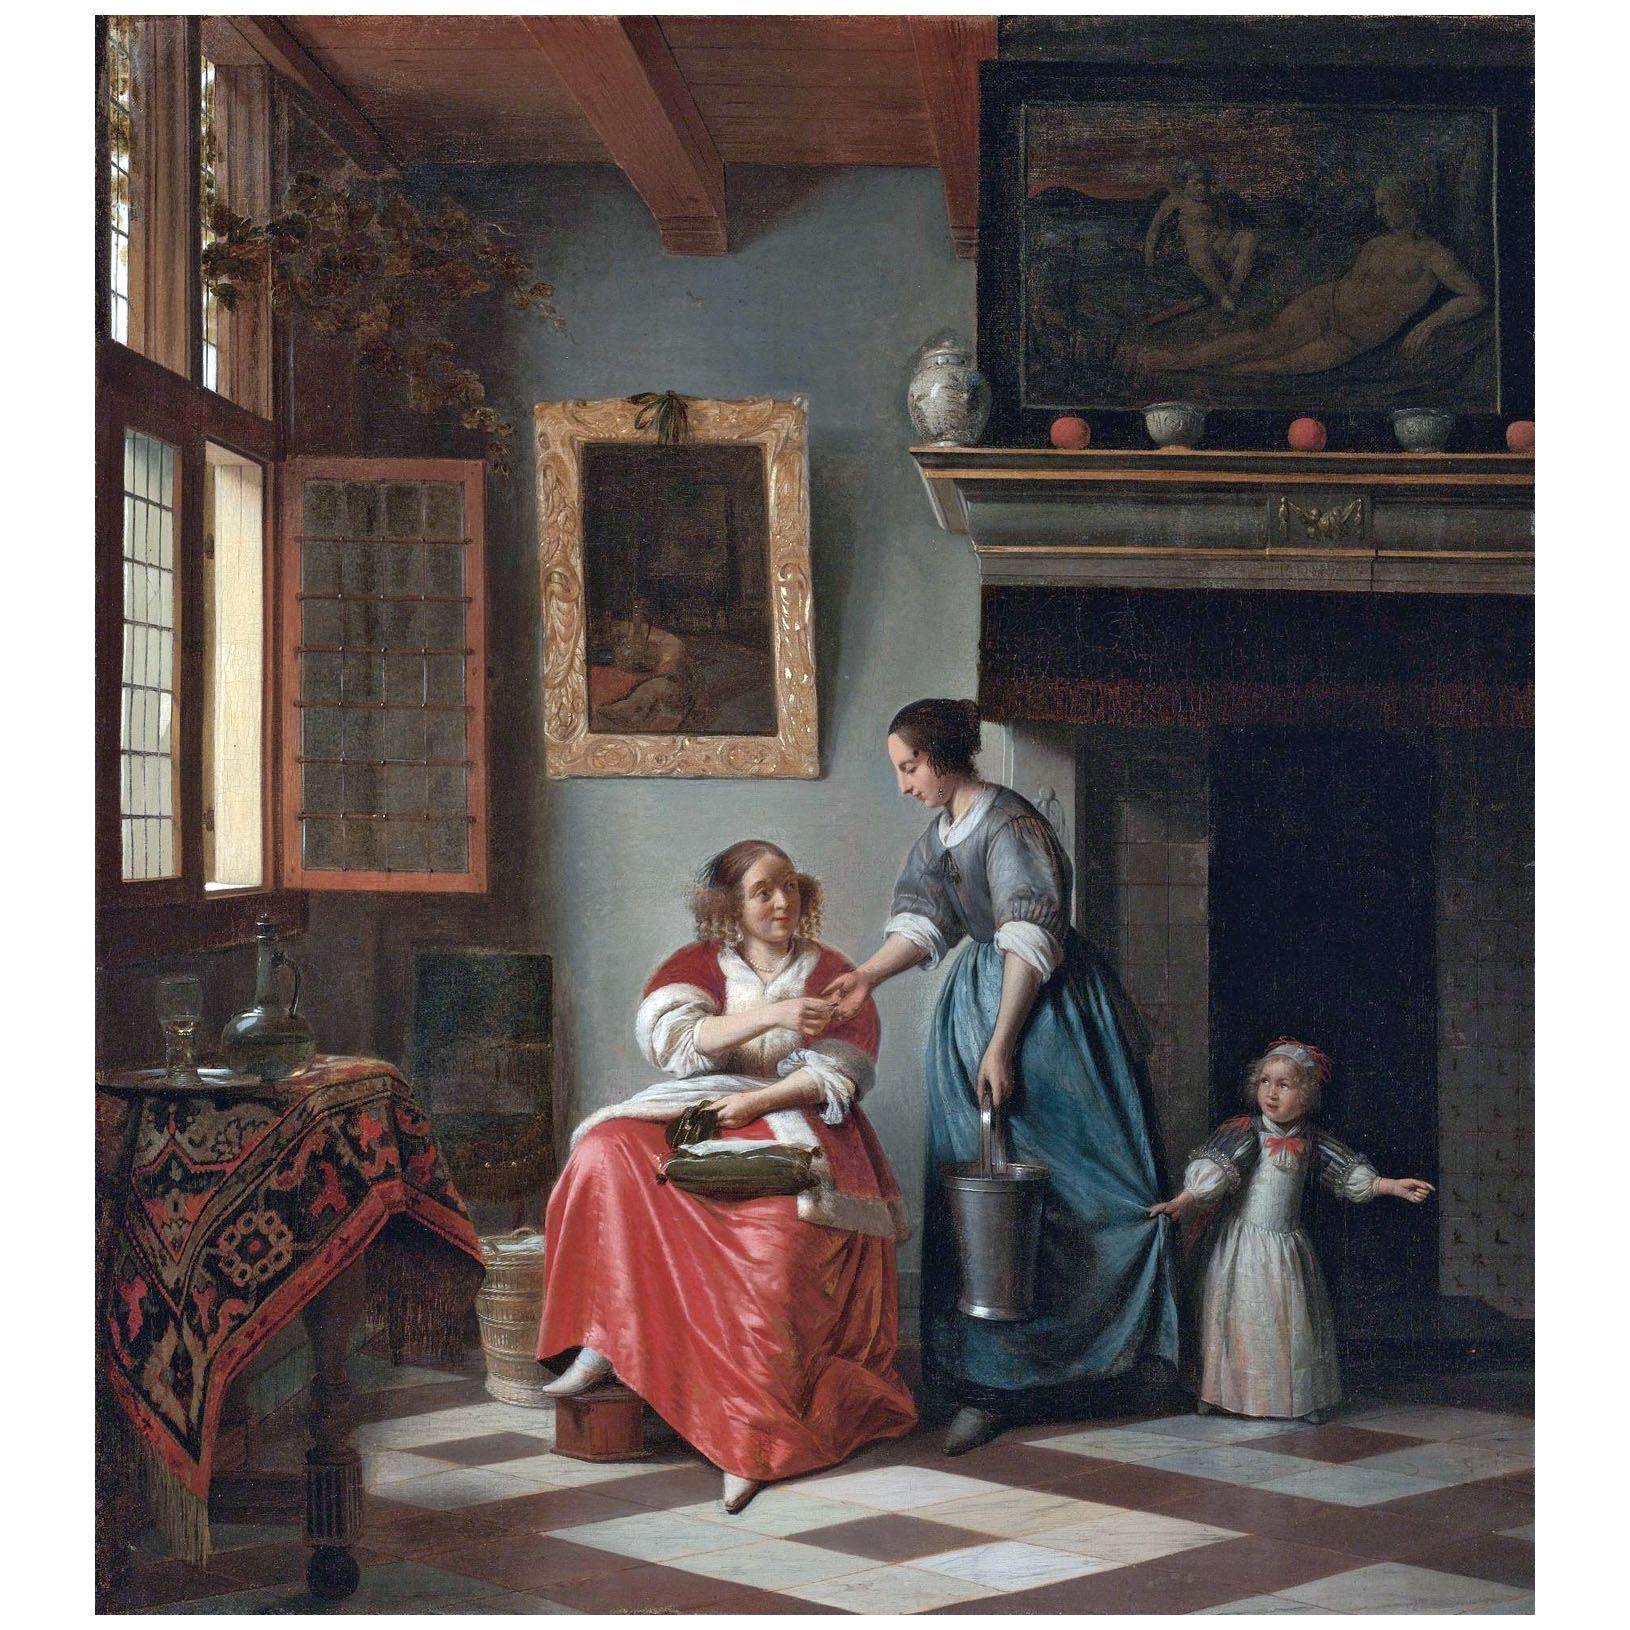 Pieter de Hooch. Woman Giving Money to a Servant Girl. 1670. LACMA Los Angeles